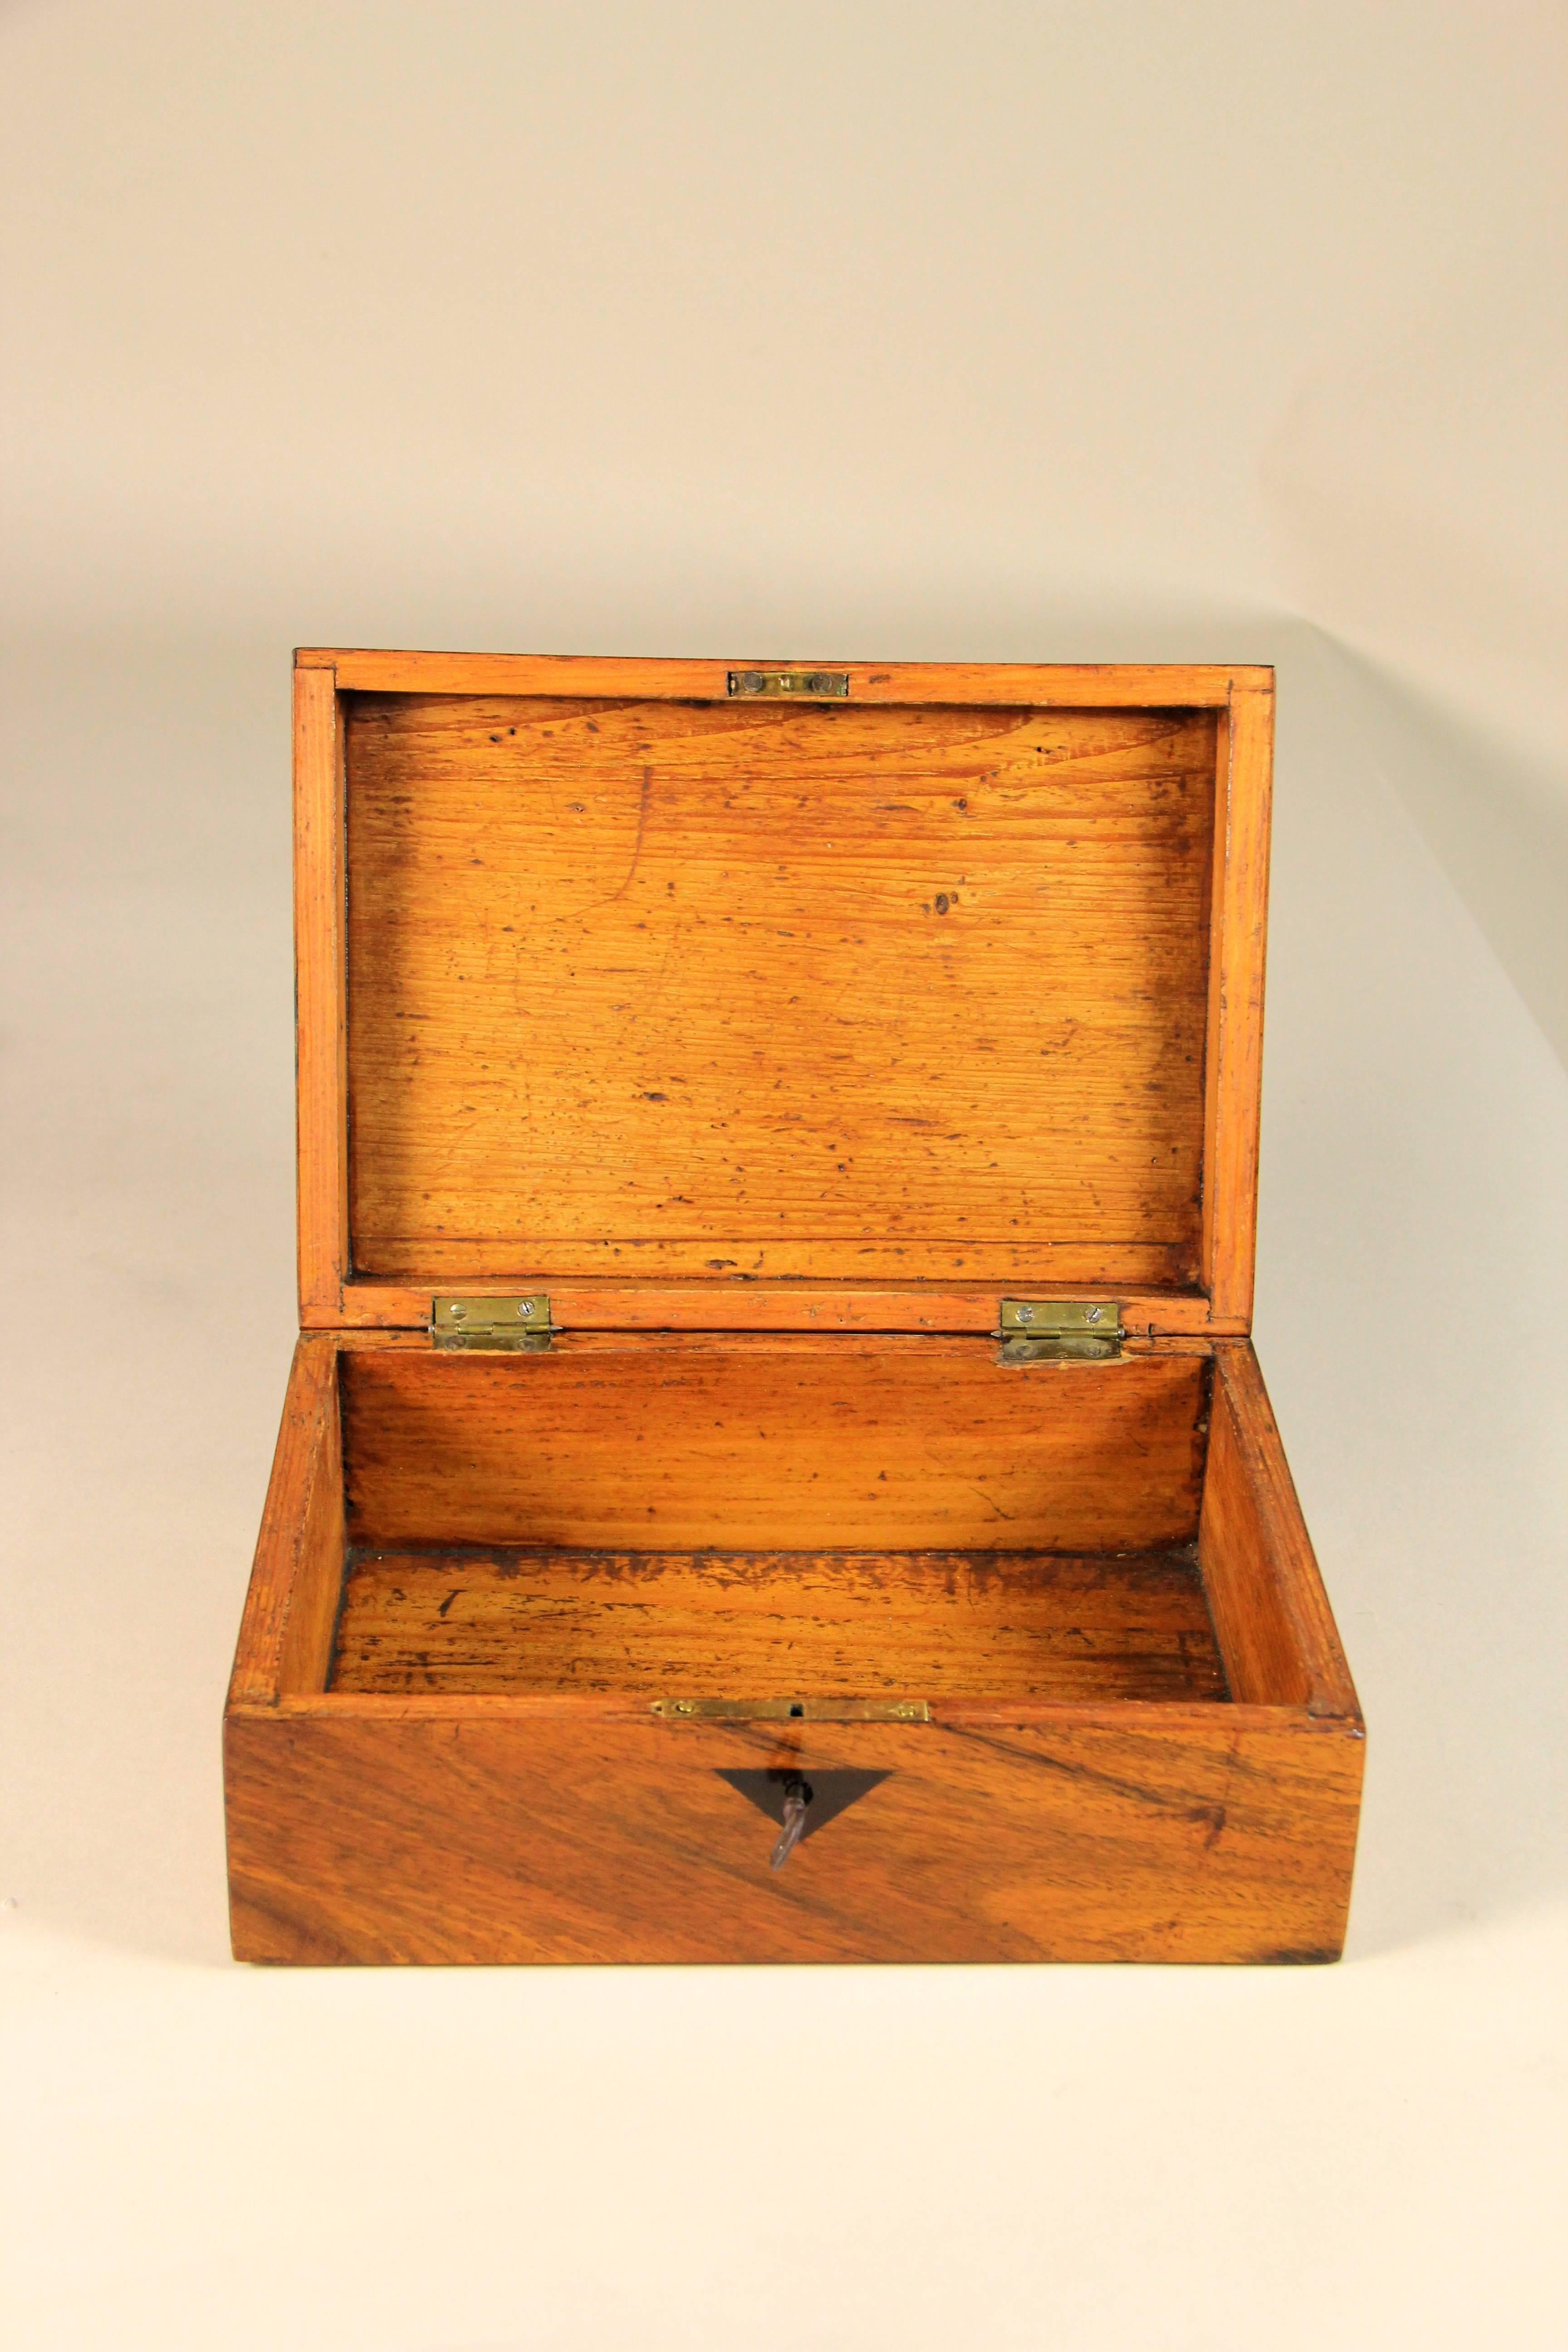 Austrian Biedermeier Nut Wood Box Early 19th Century, Austria, circa 1835